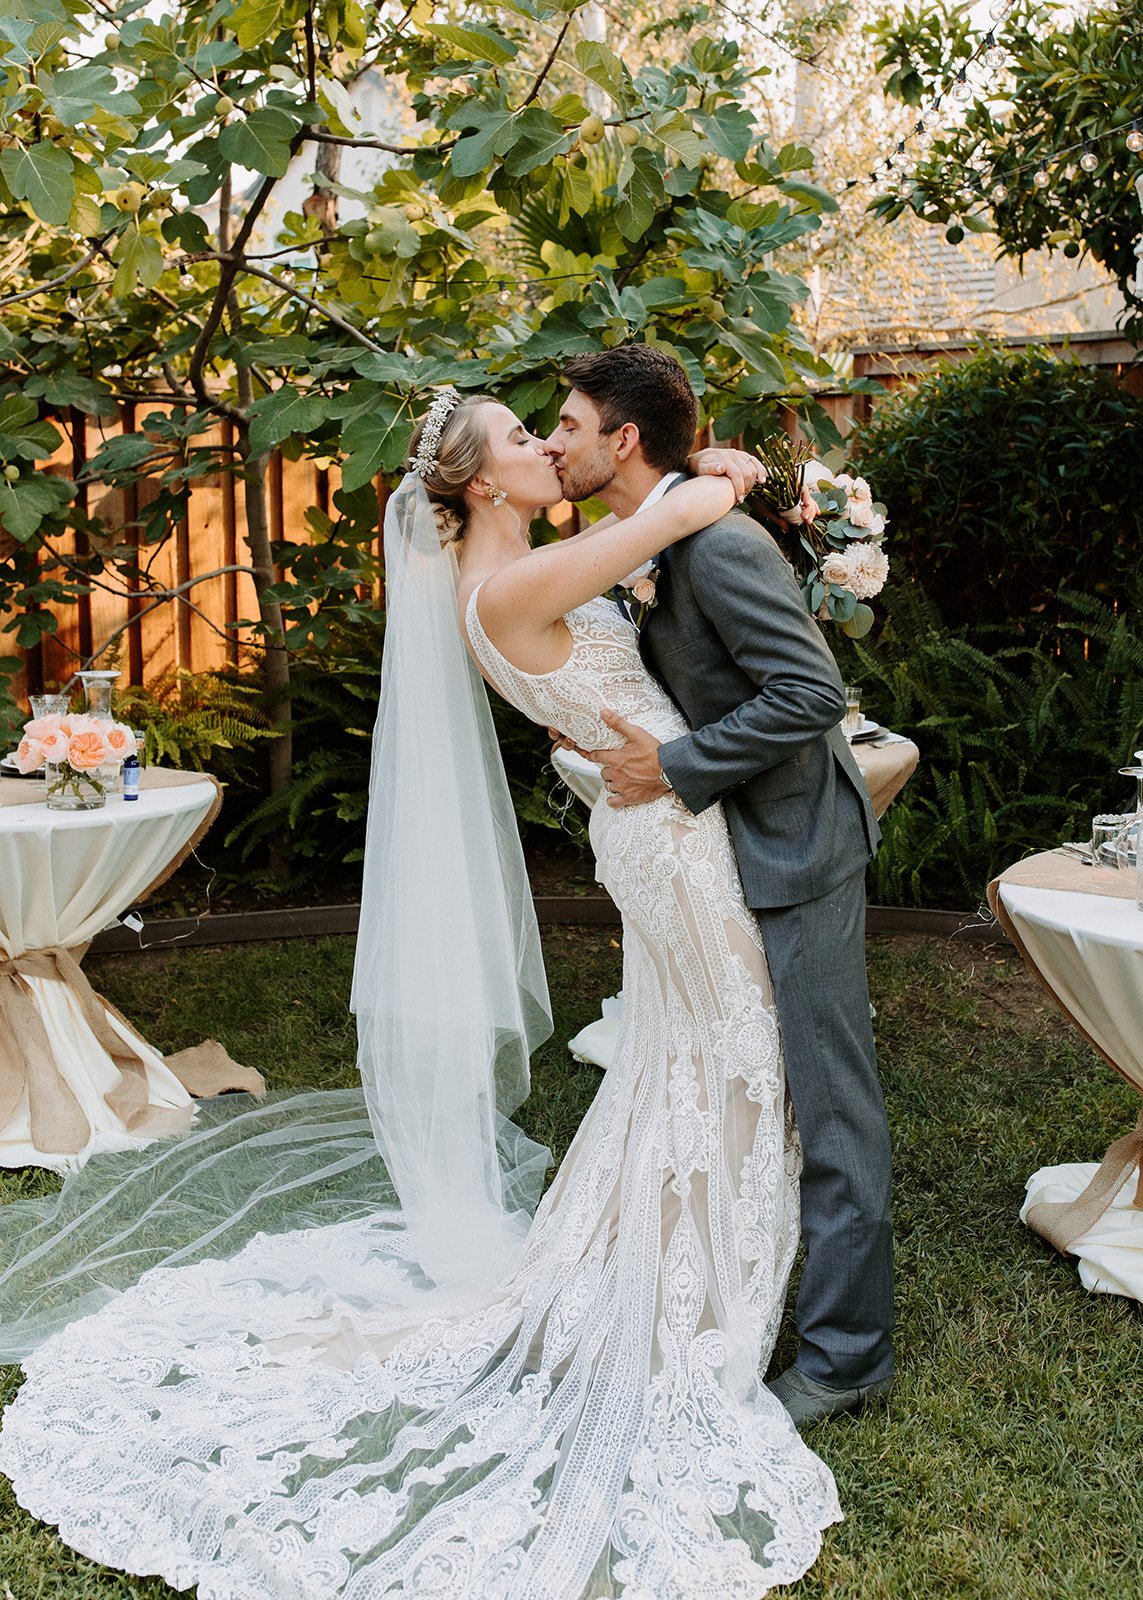 5 tips for planning a backyard micro wedding